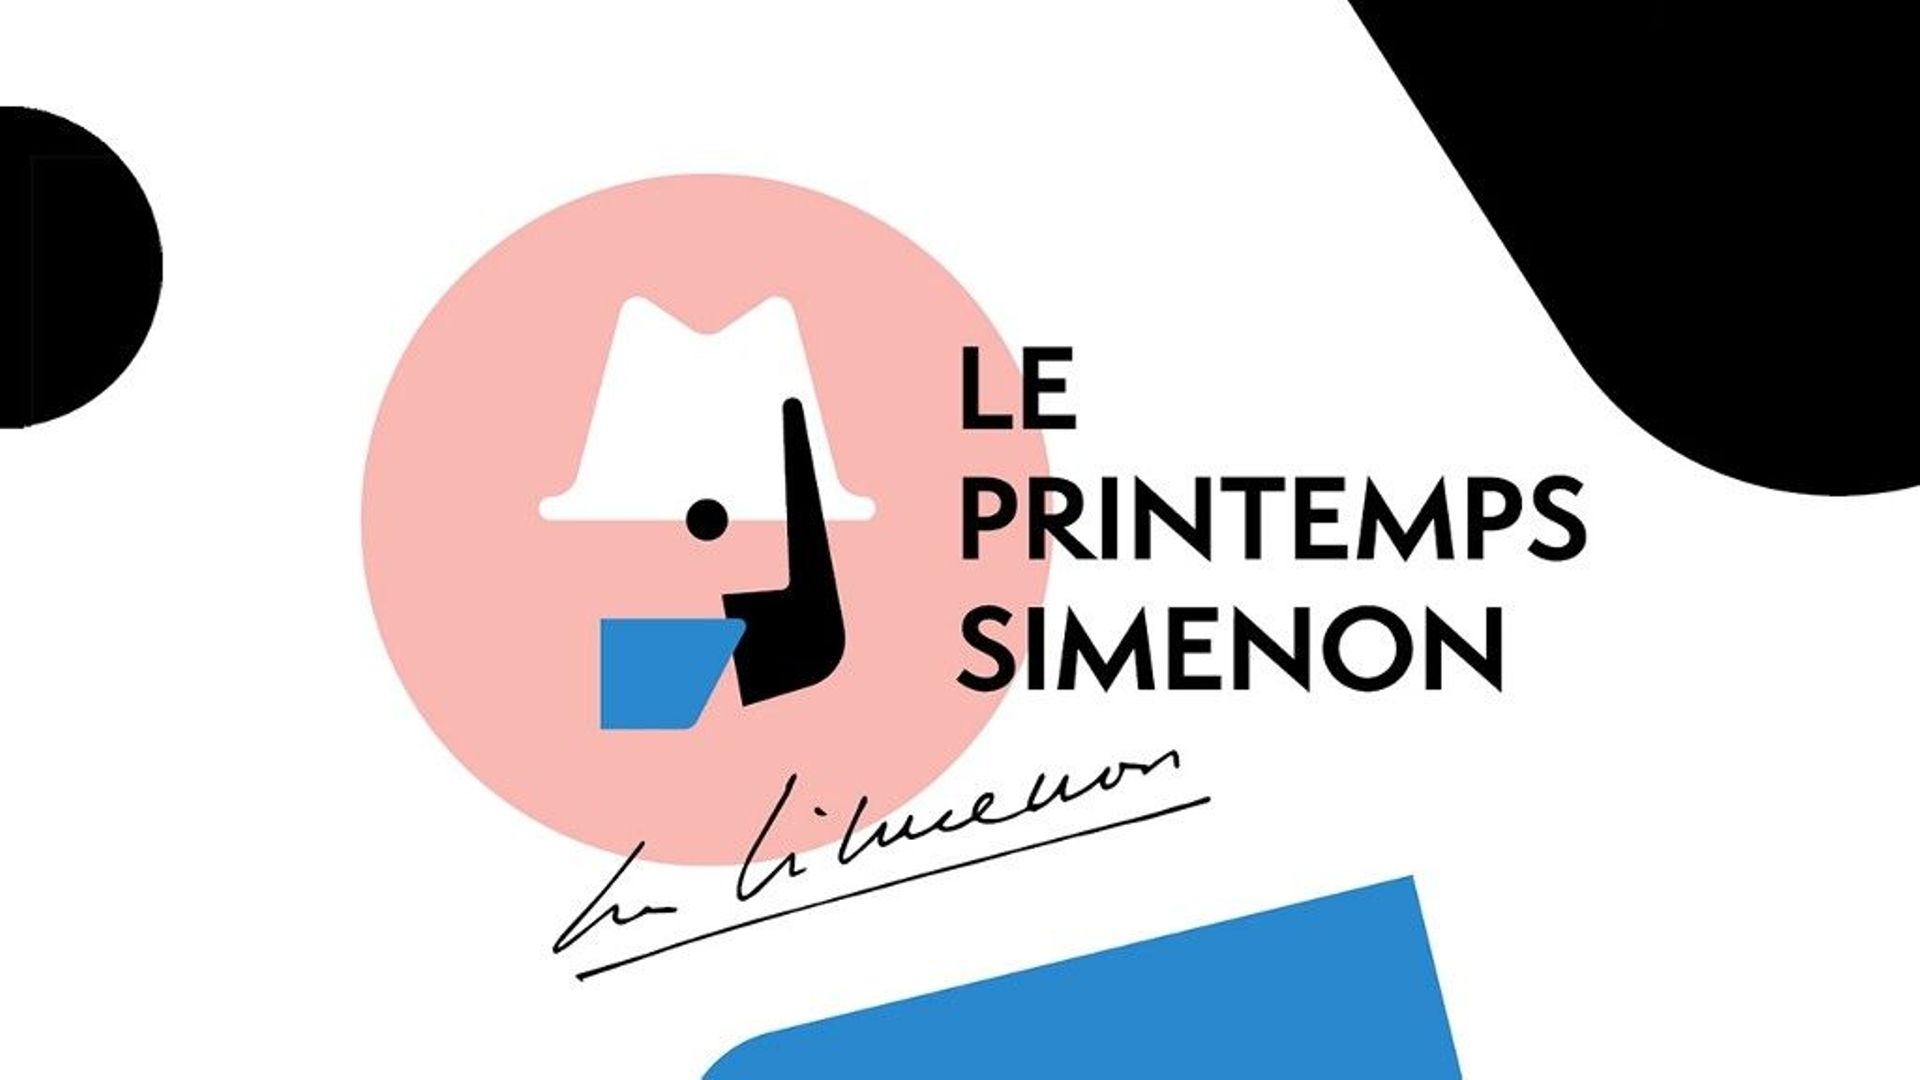 Le festival Le Printemps Simenon se tiendra à Liège en mars 2023